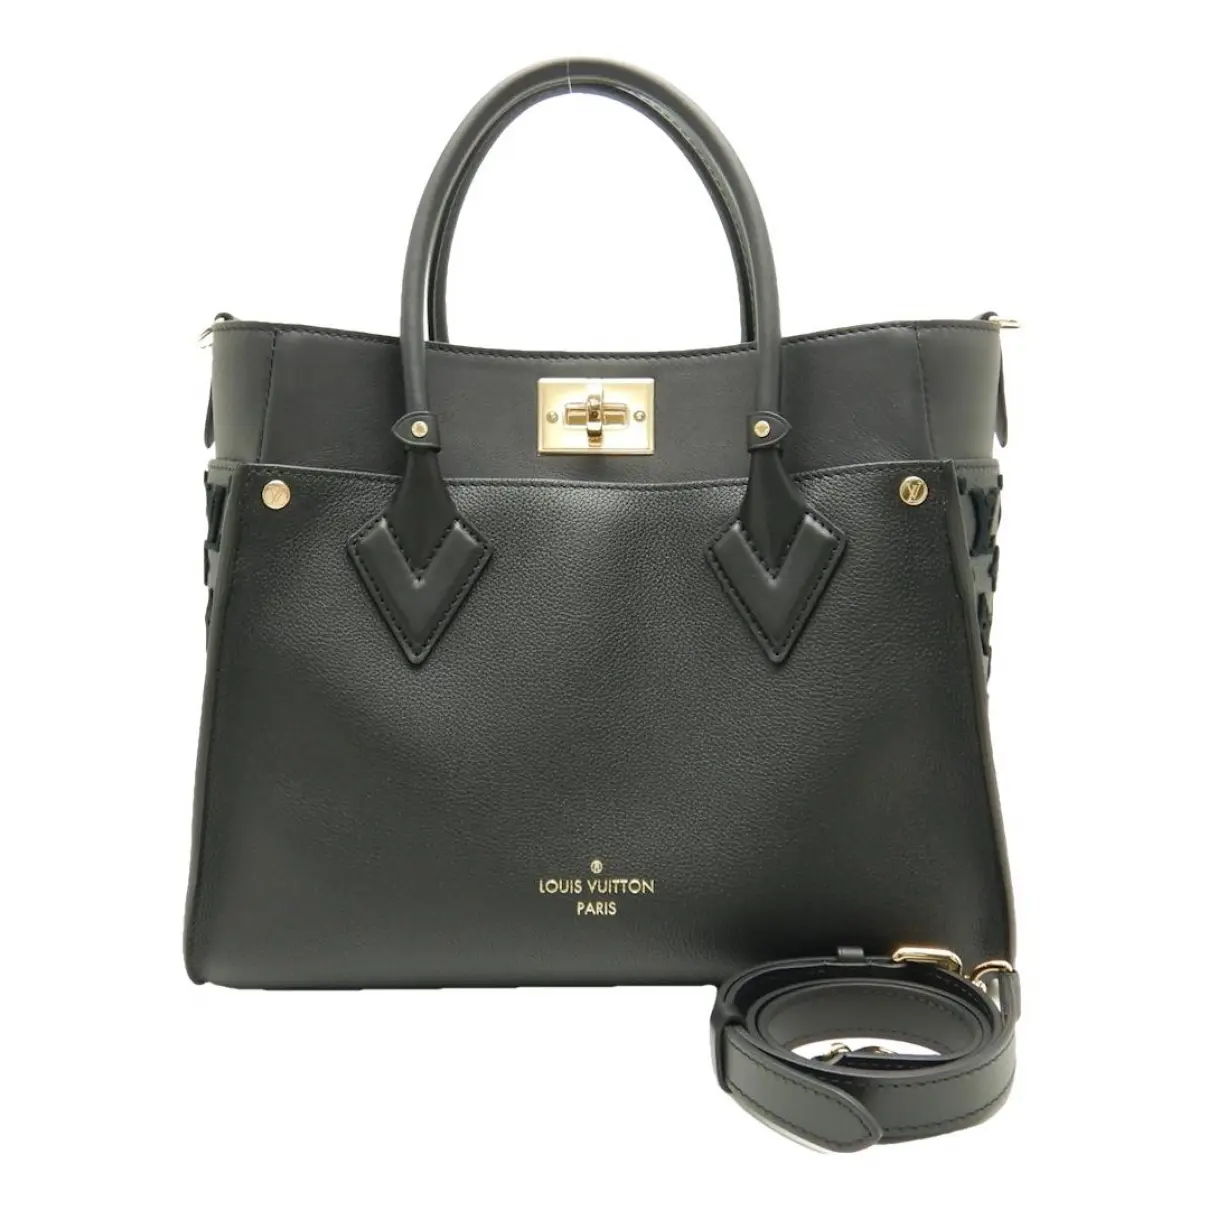 On My Side leather handbag Louis Vuitton